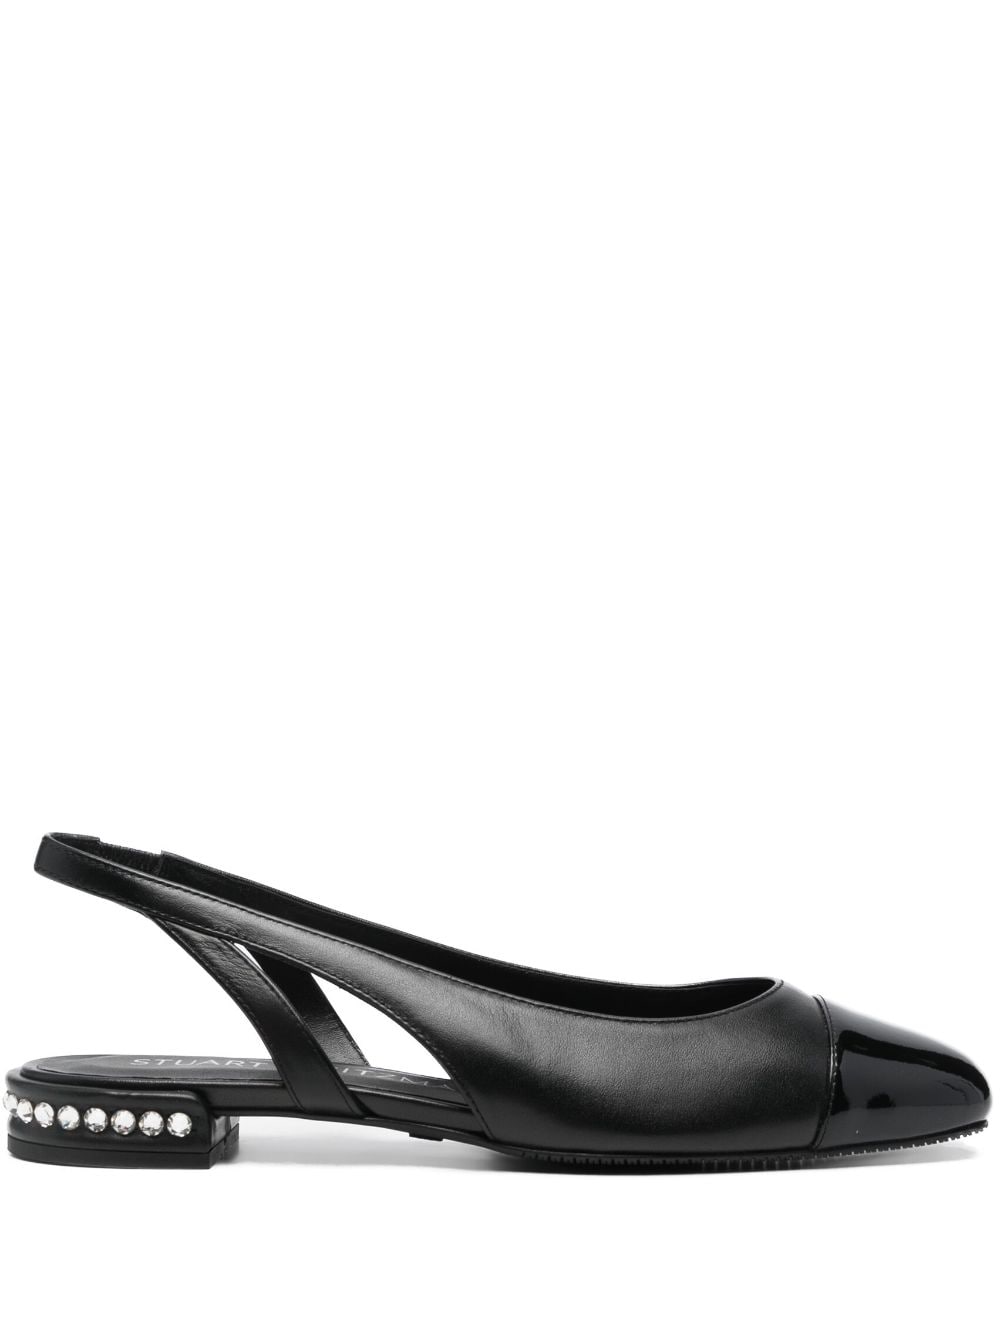 Stuart Weitzman Crystal Slingback leather ballerina shoes - Black von Stuart Weitzman